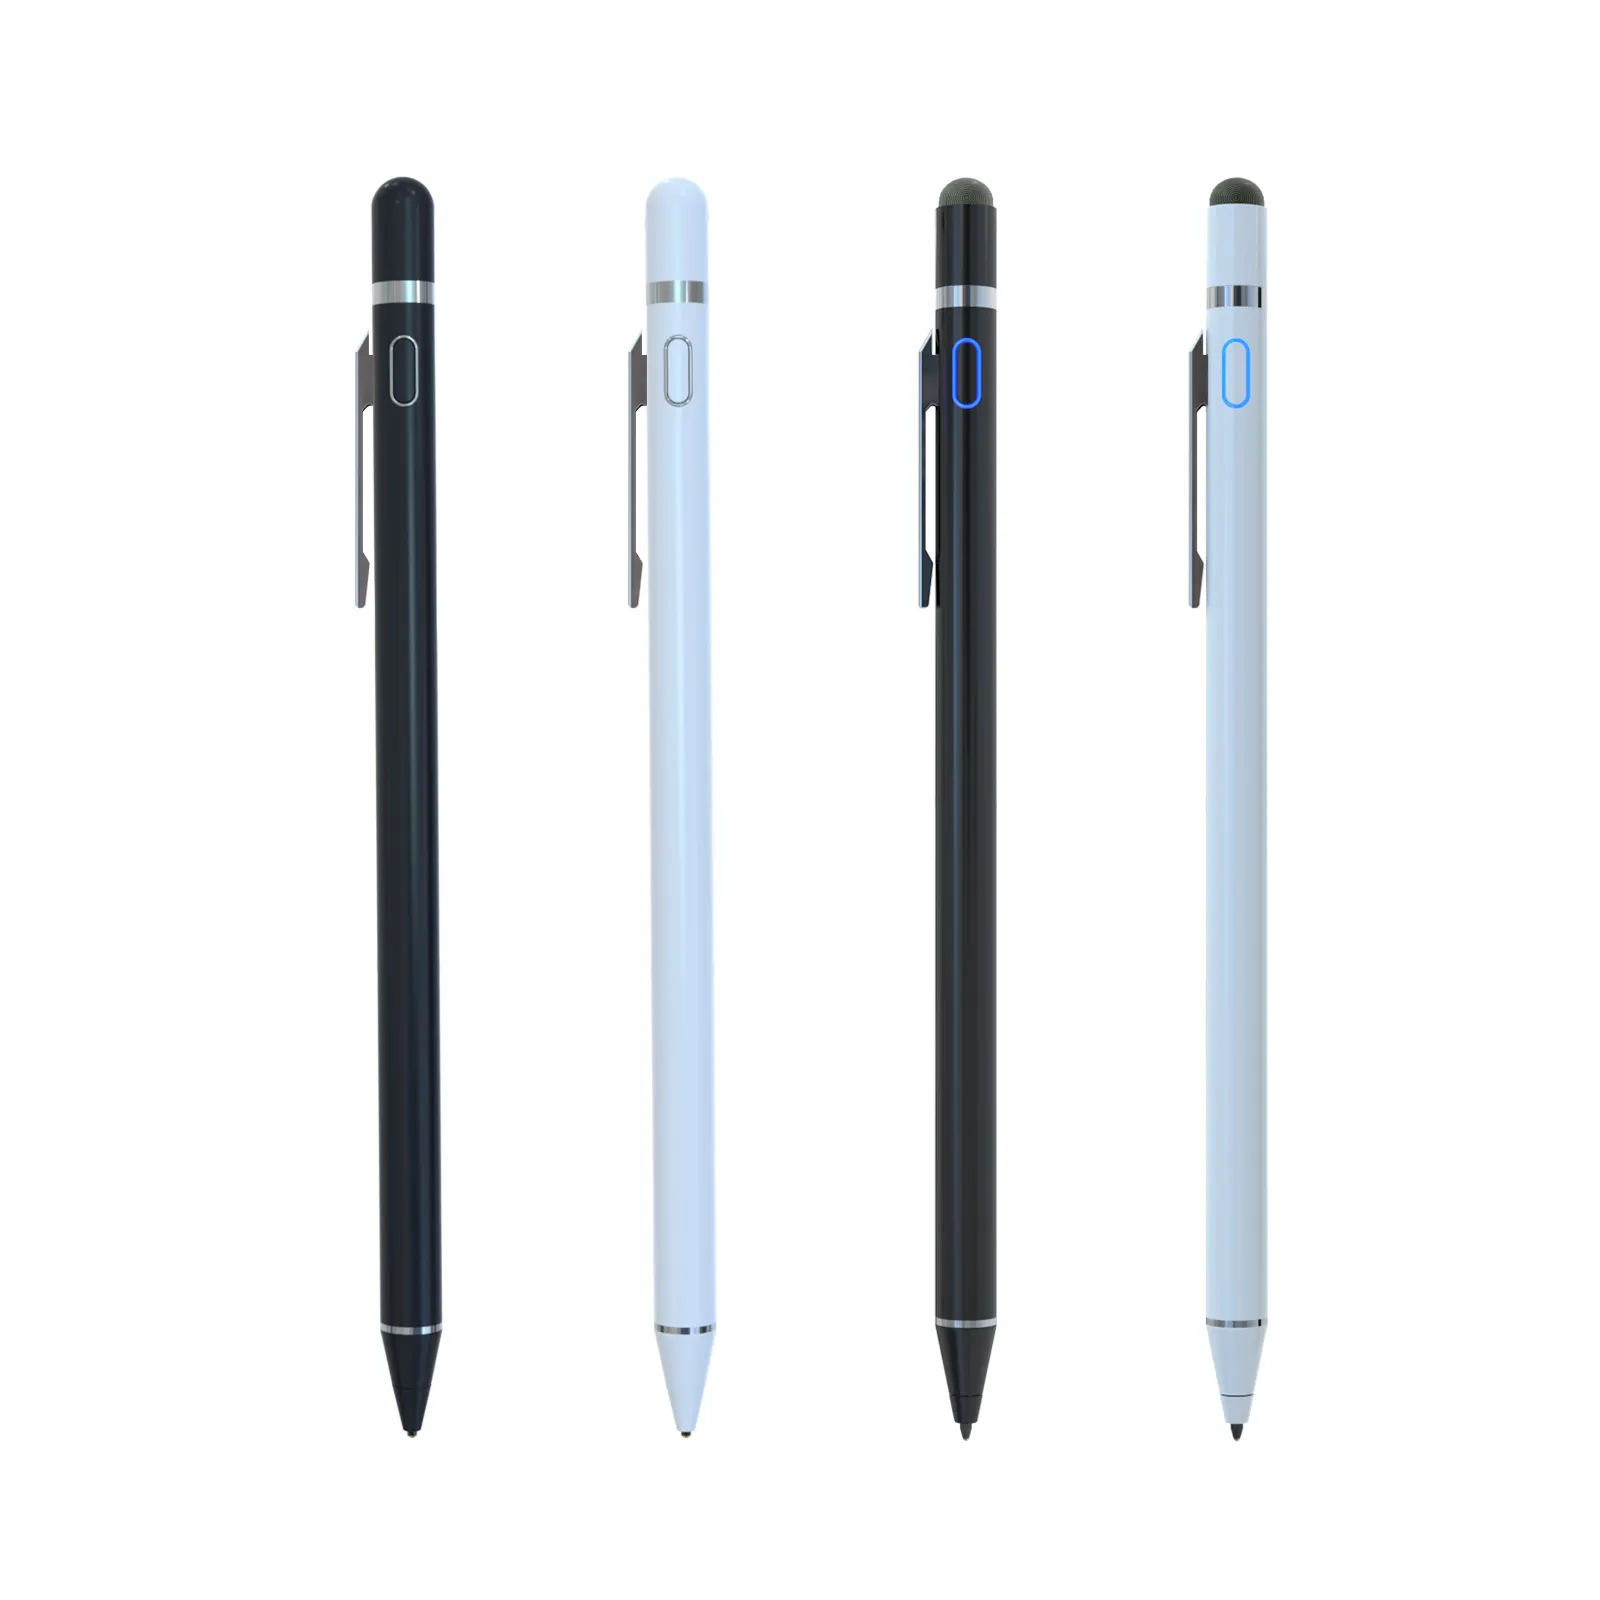 Stylus pen Universal 2 en 1 para dibujo, lápiz táctil para teléfono android y Apple